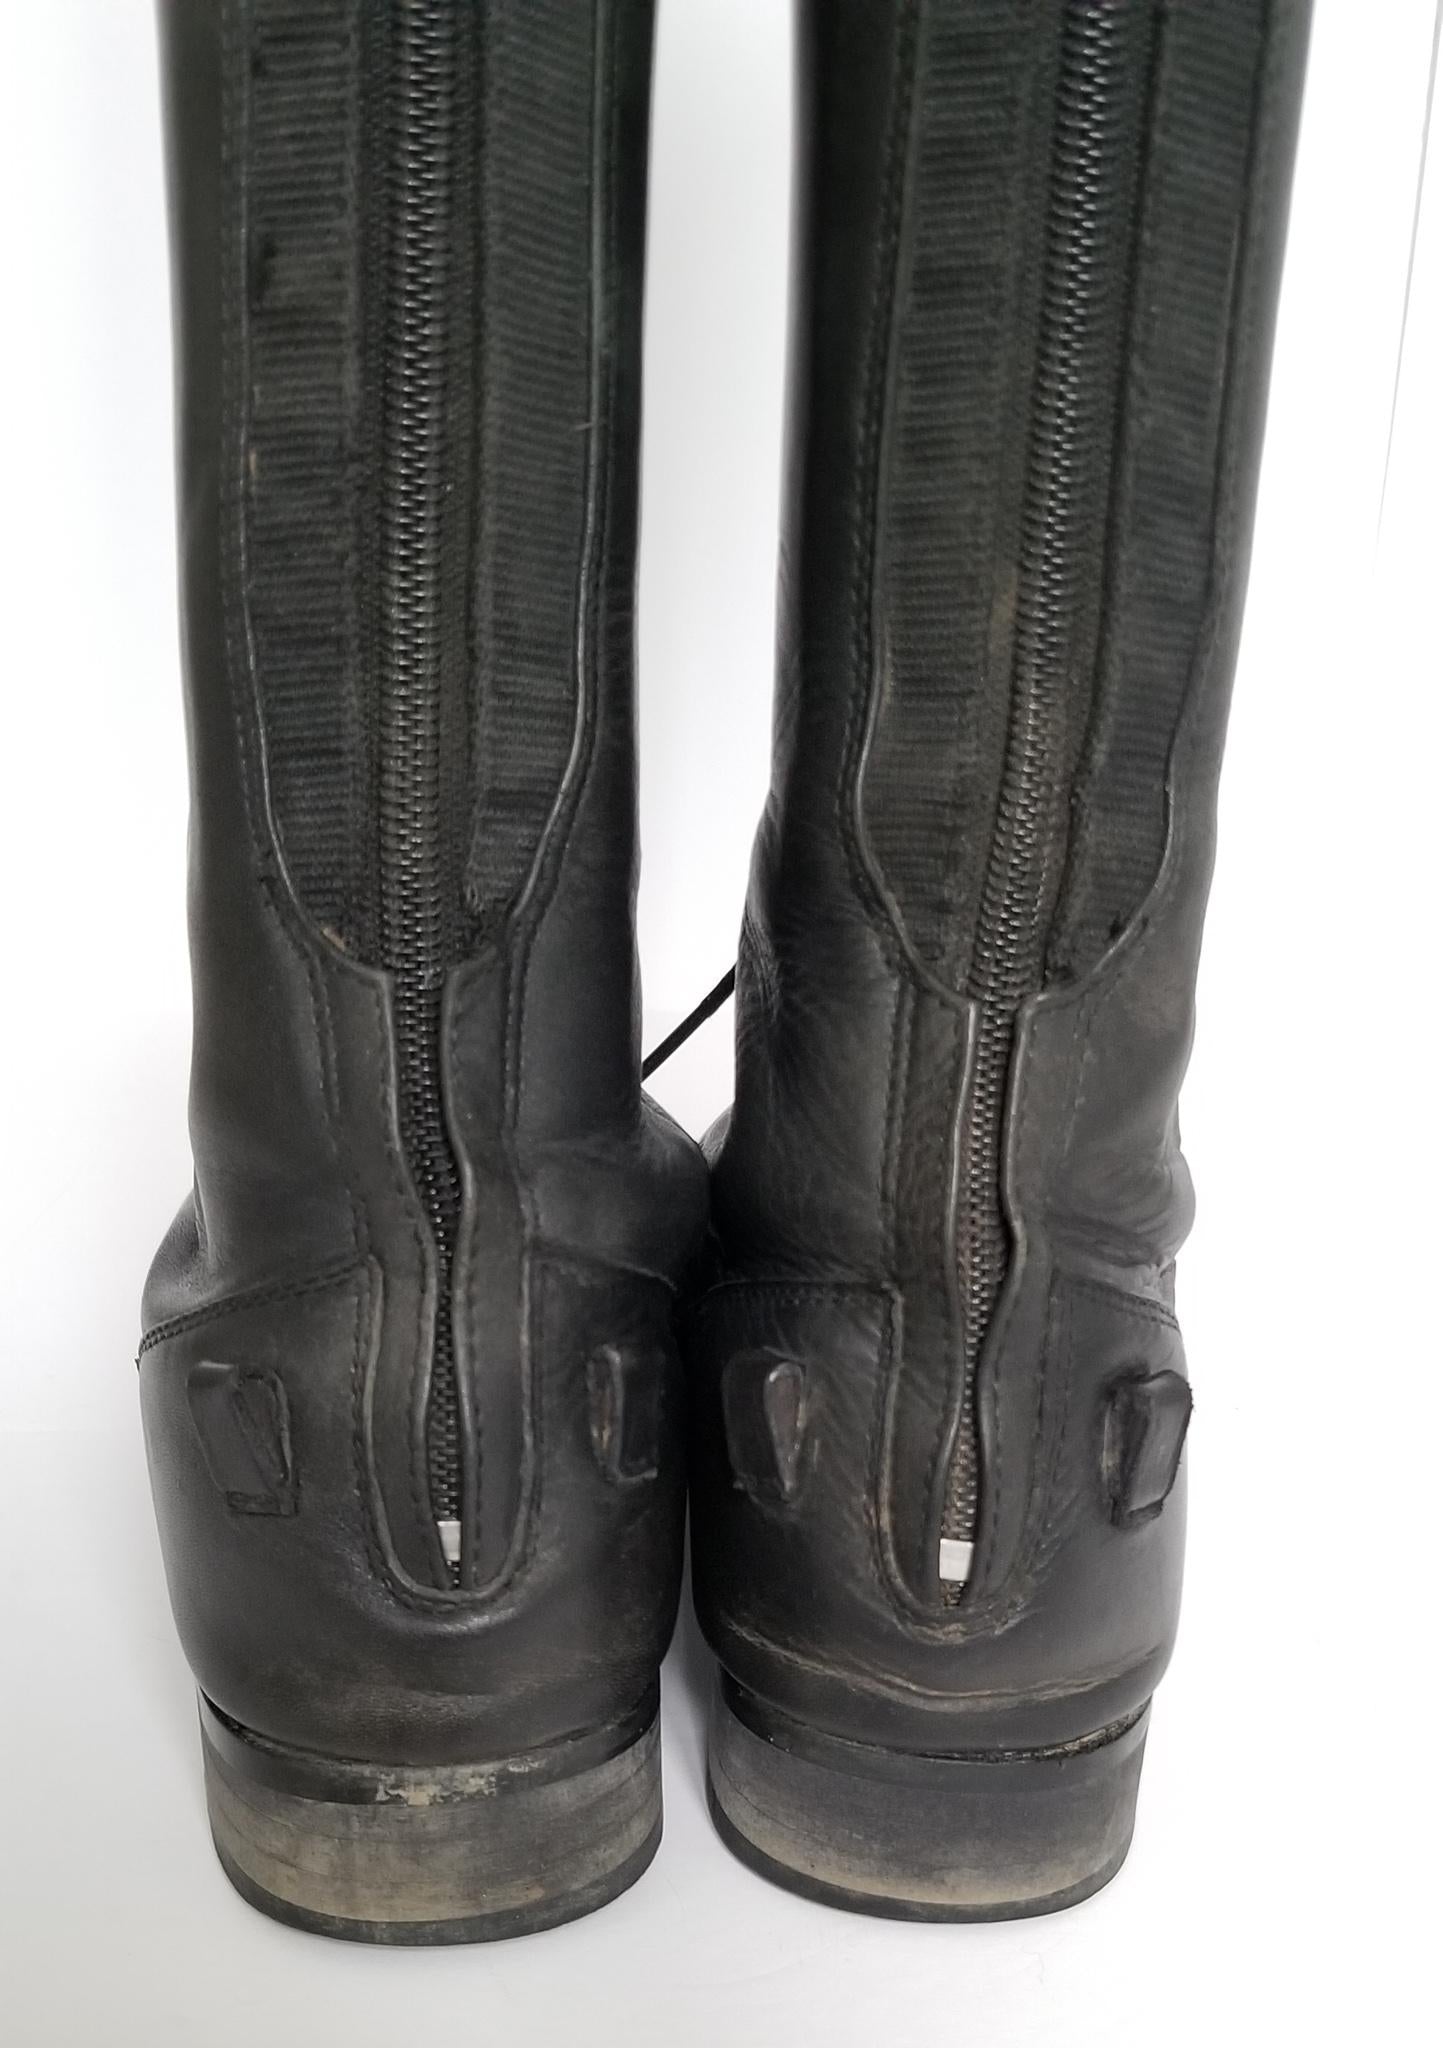 Treadstone Tuscany Field Boots - Black - Women's 8.5W